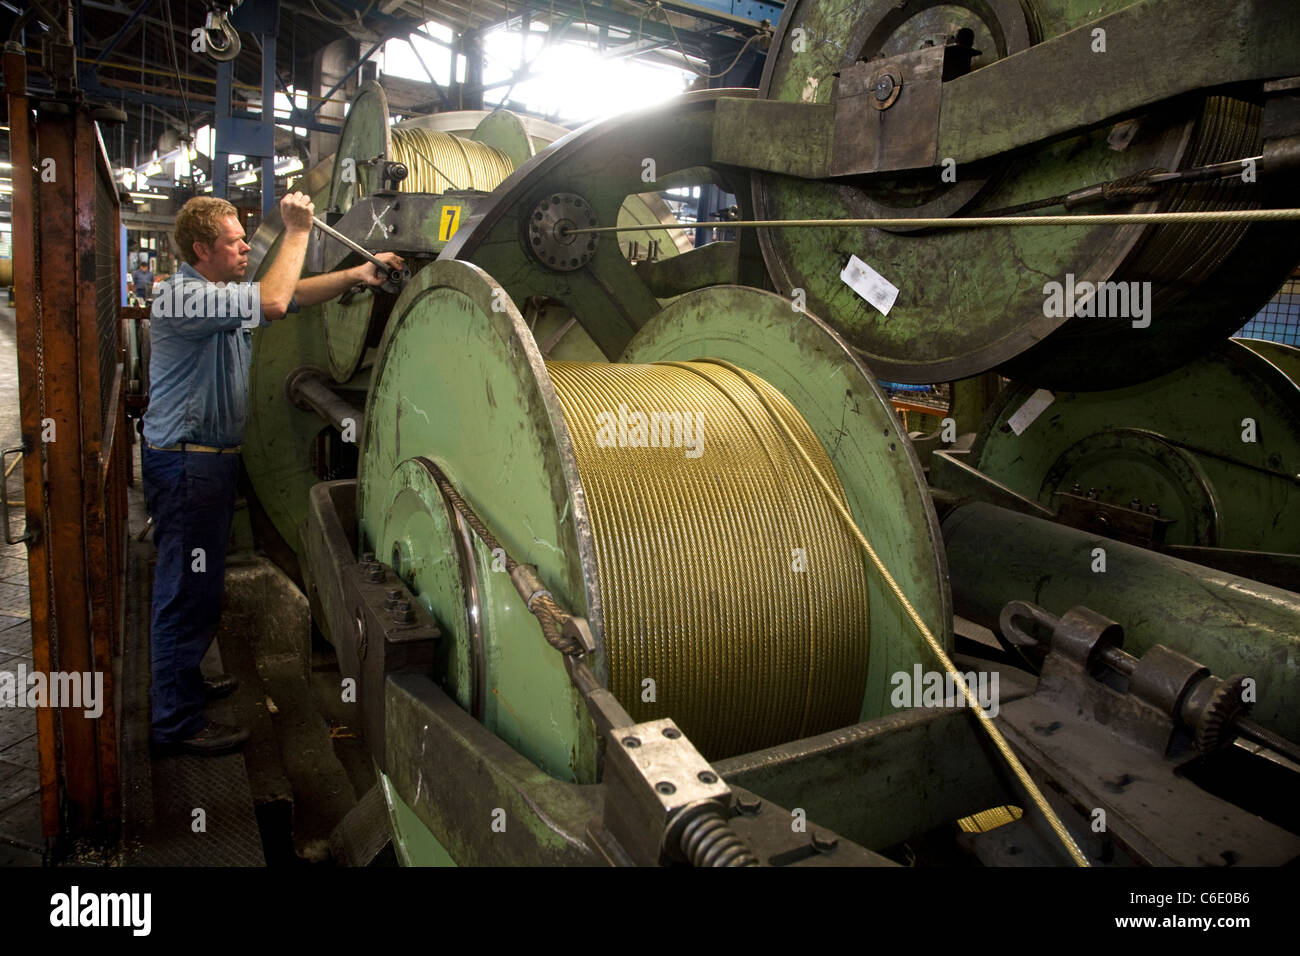 Pfeifer Drako wire rope factory, Muelheim an der Ruhr, Germany Stock Photo